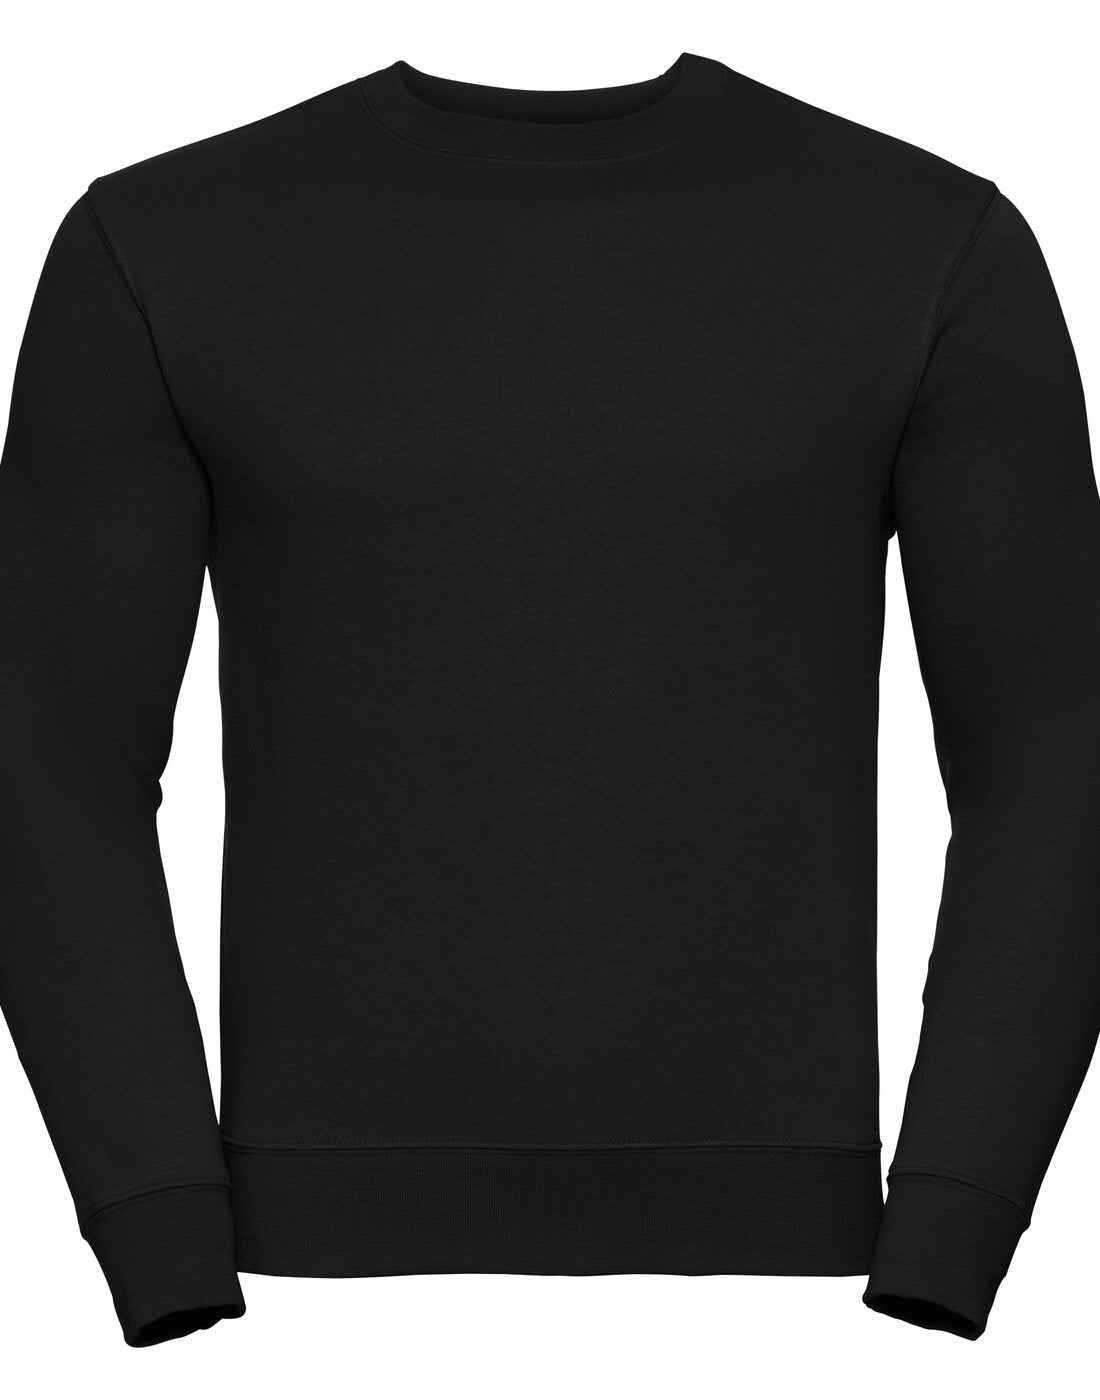 Russell Authentic Sweatshirt Black